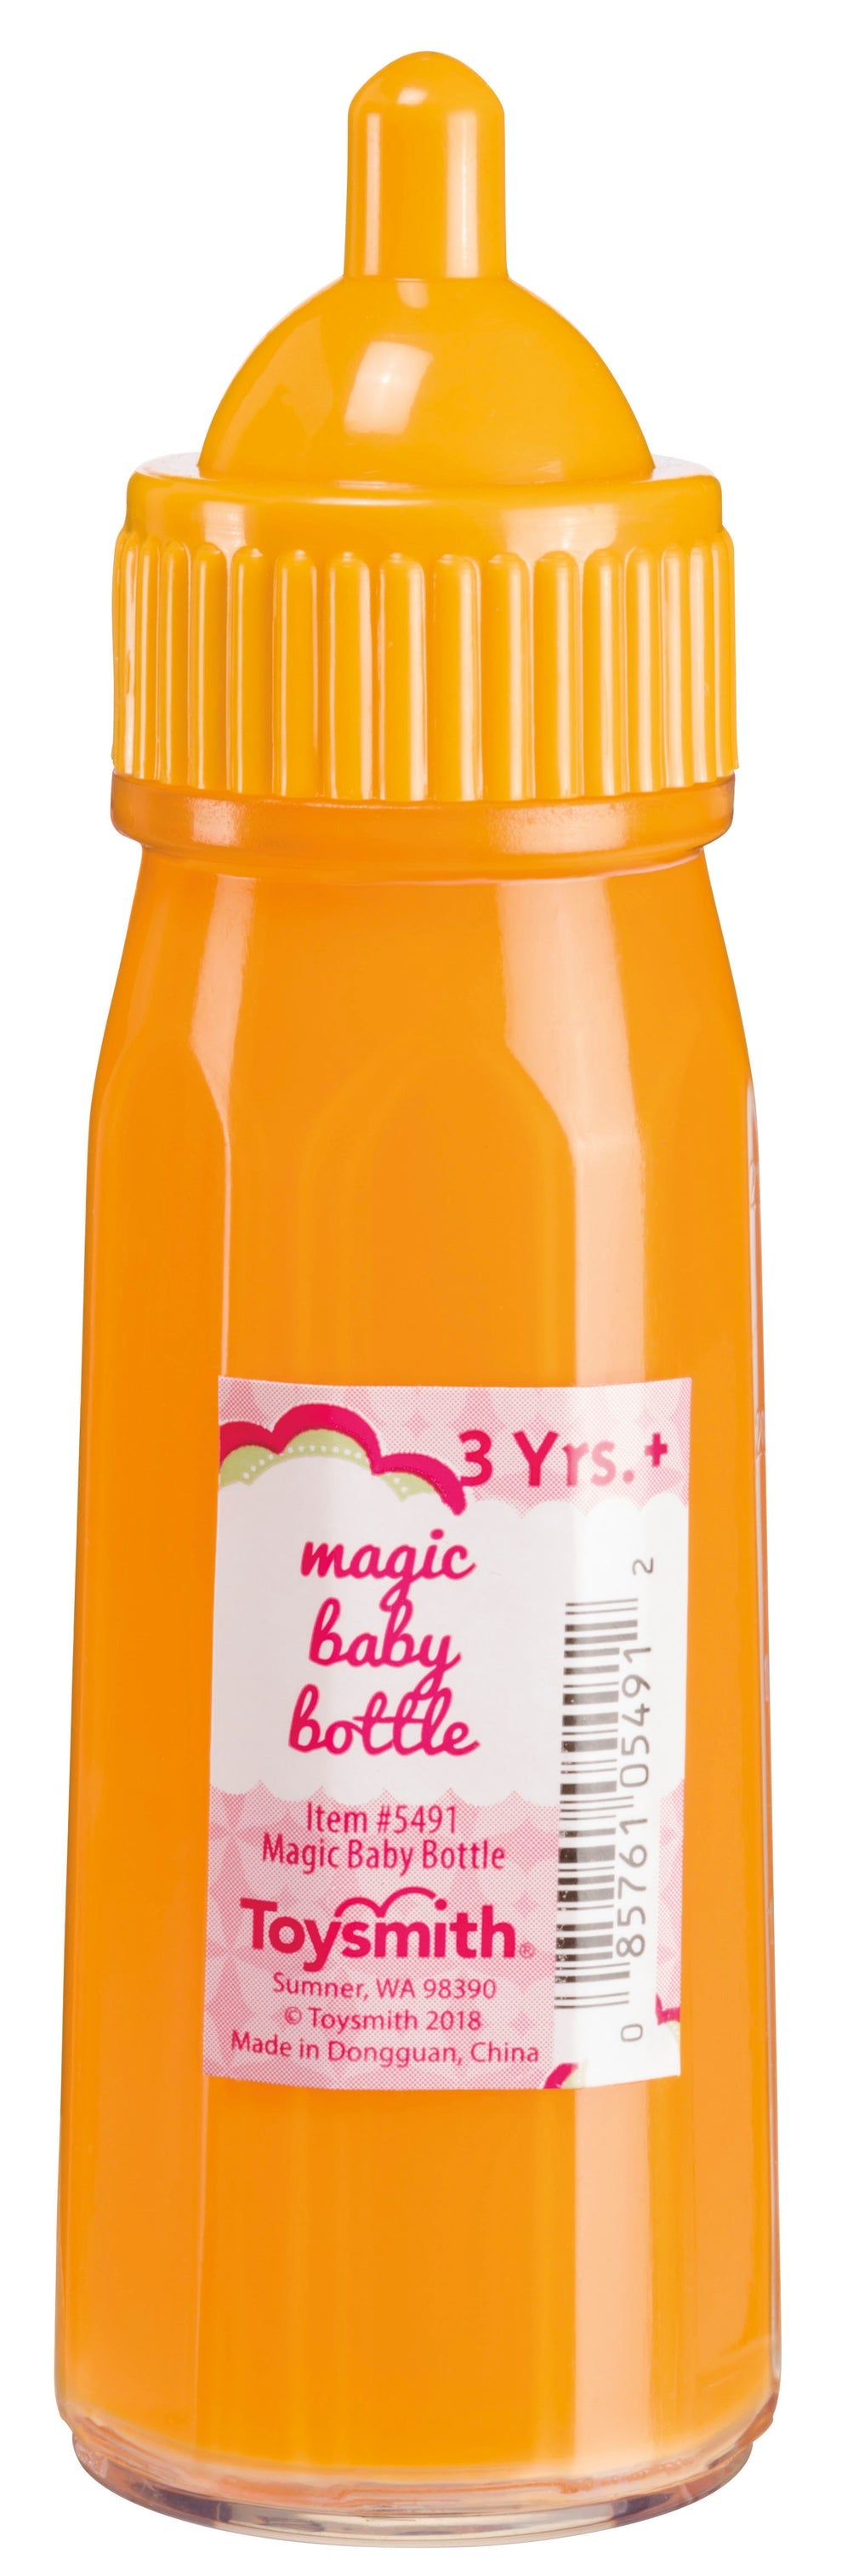 Magic Baby Bottle by Toysmith